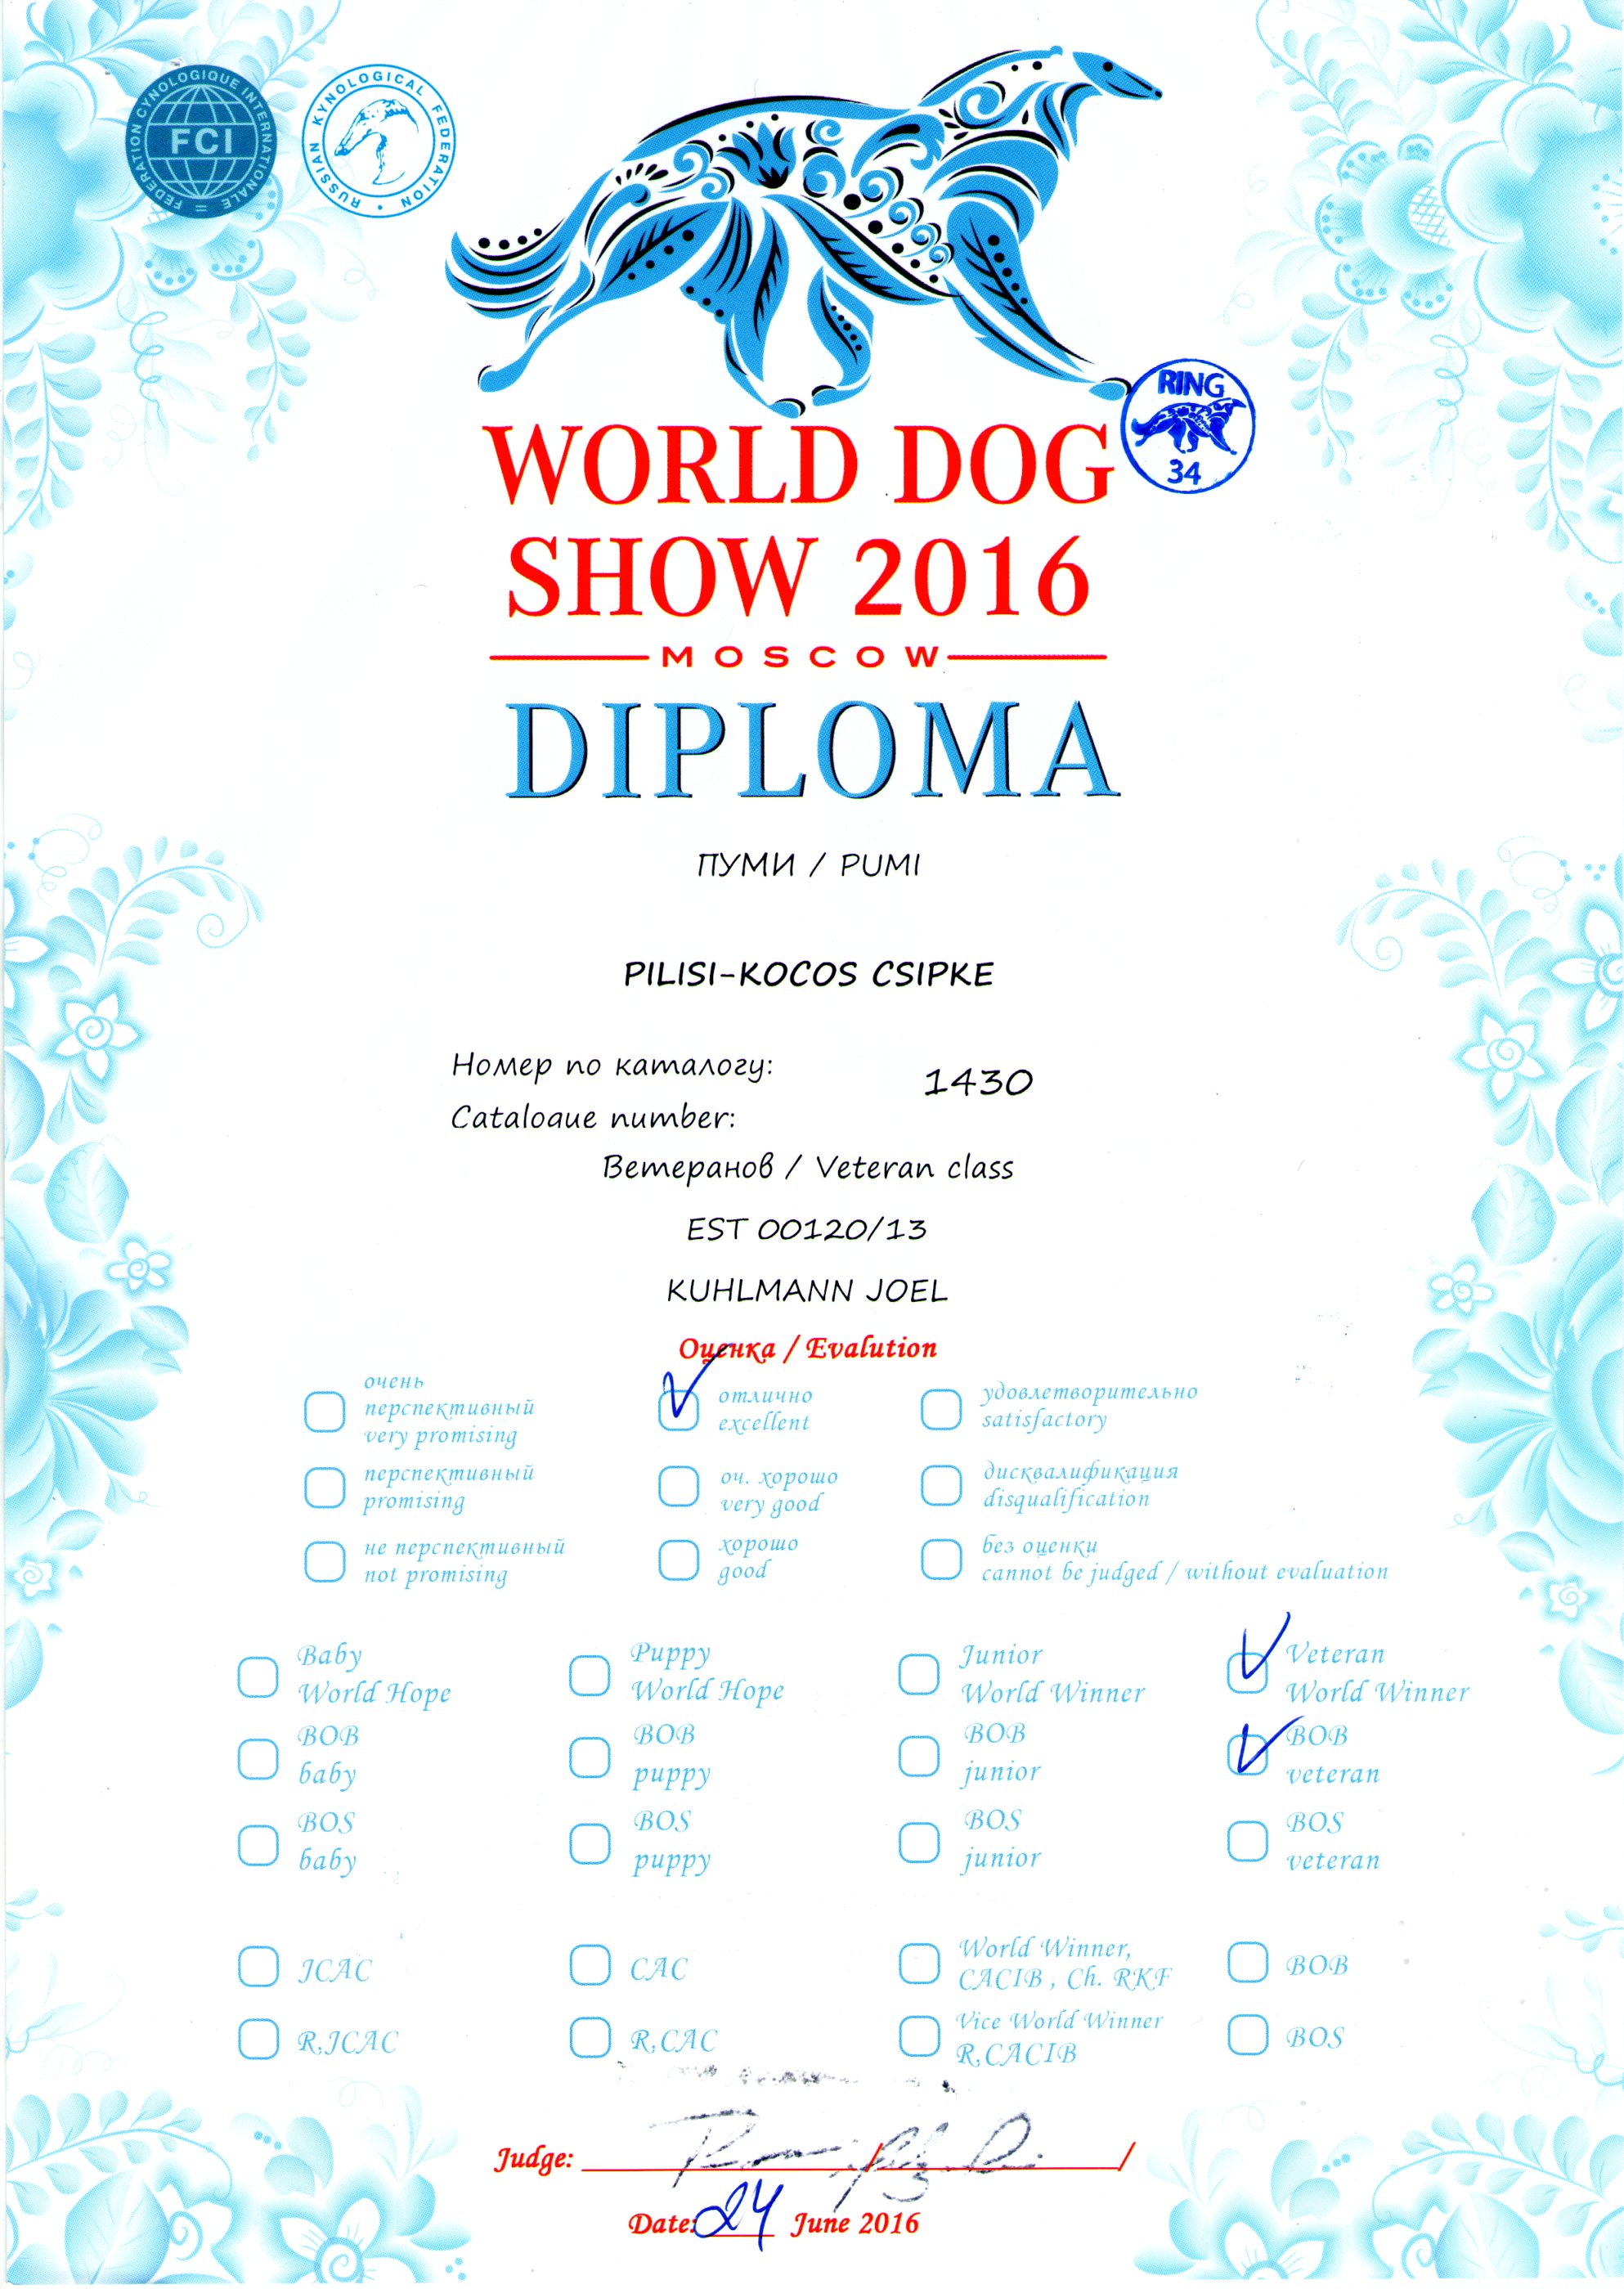 WORLD DOG SHOW 2016 MOSCOW - Diploma Pumi Pilisi-Kocos Csipke